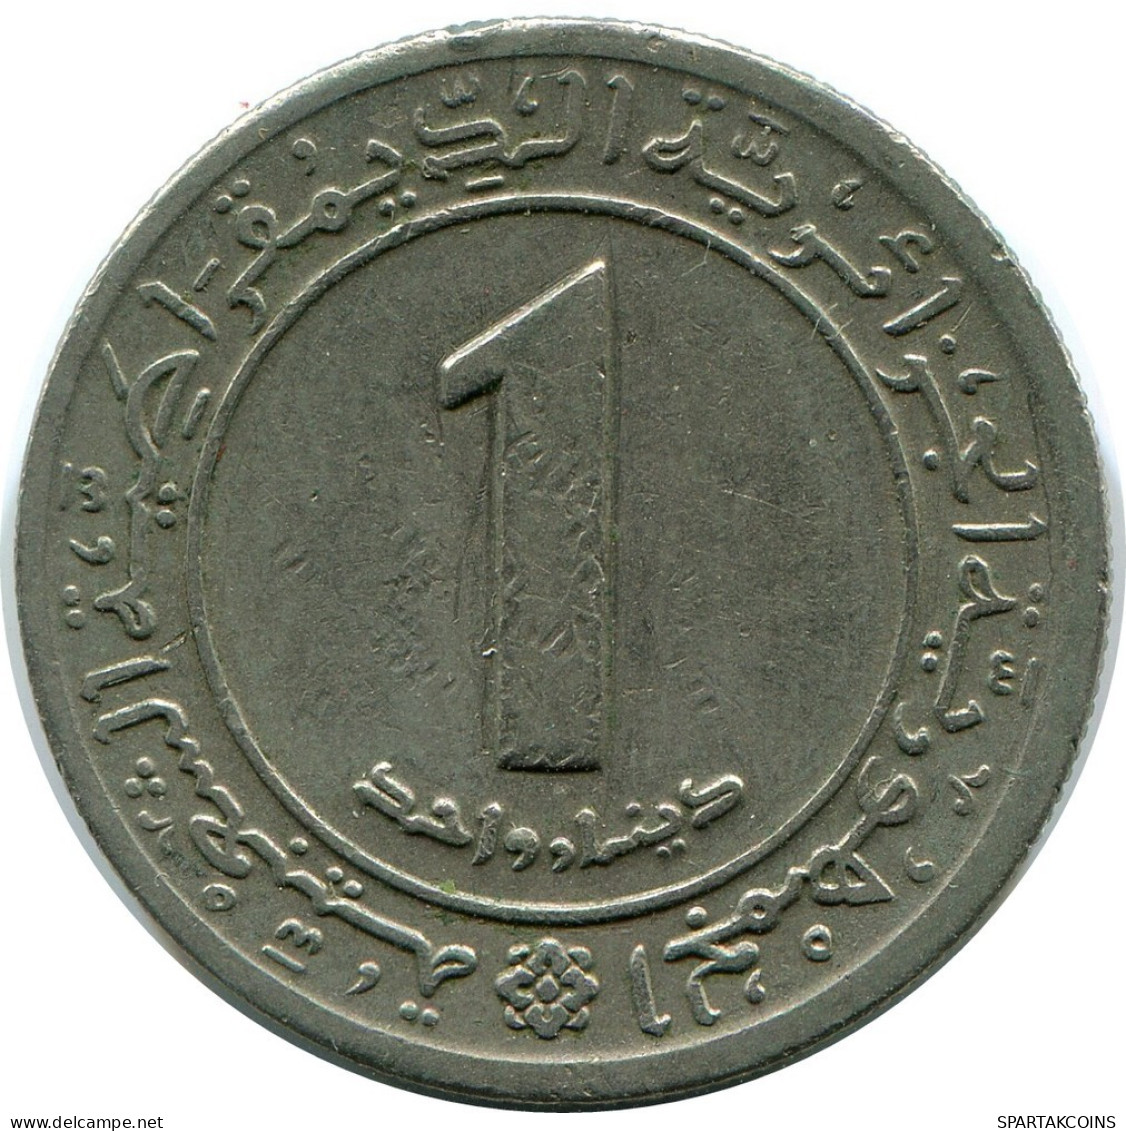 1 DINAR 1972 ALGERIEN ALGERIA Münze #AP510.D.A - Algeria